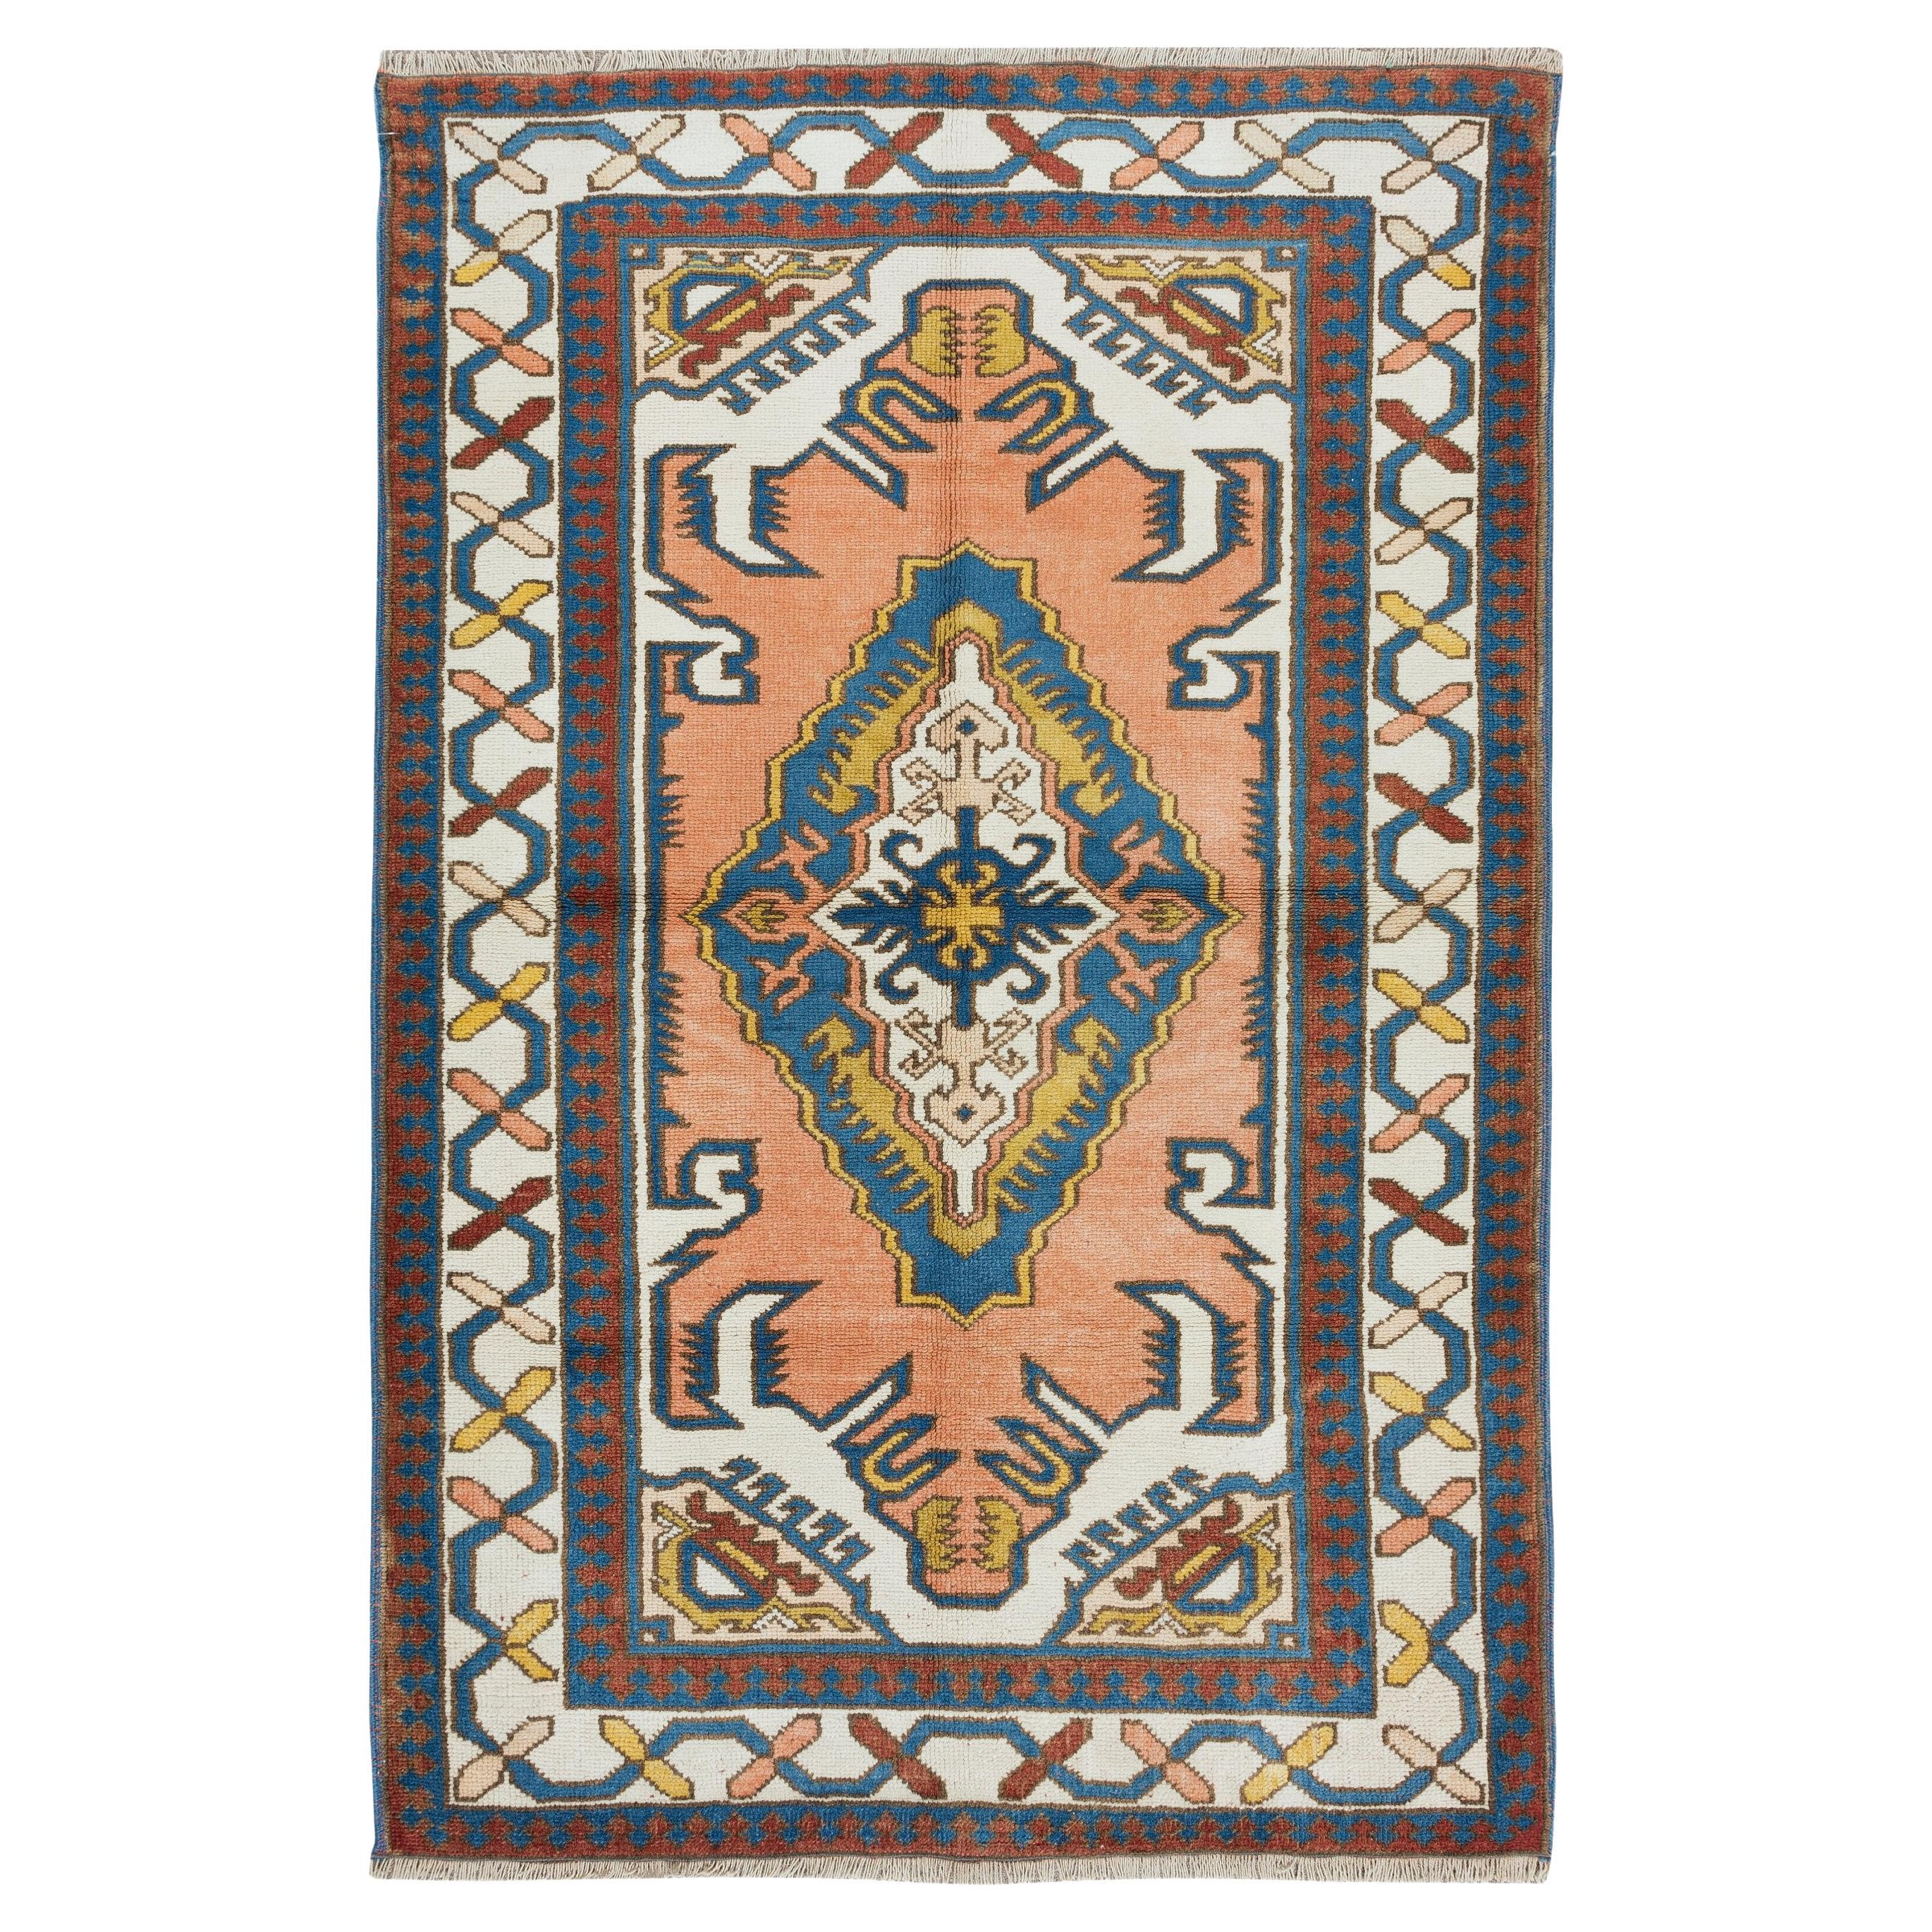 4x6 Ft Mid-Century Handmade Turkish Traditional Wool Rug with Geometric Design